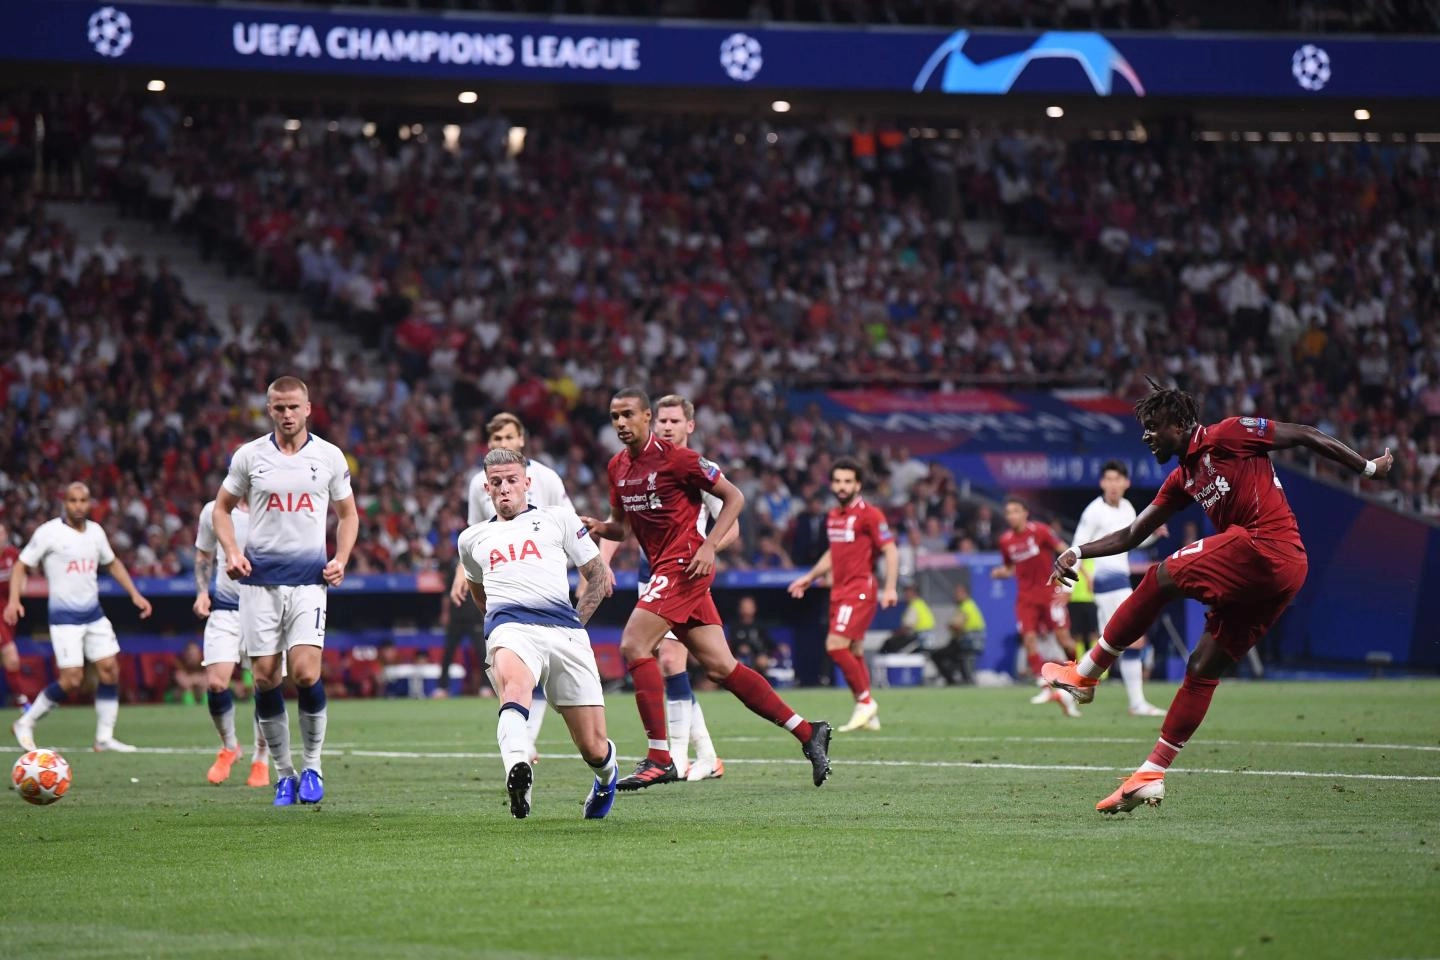 June 2019: Assisting Divock Origi in the Champions League final